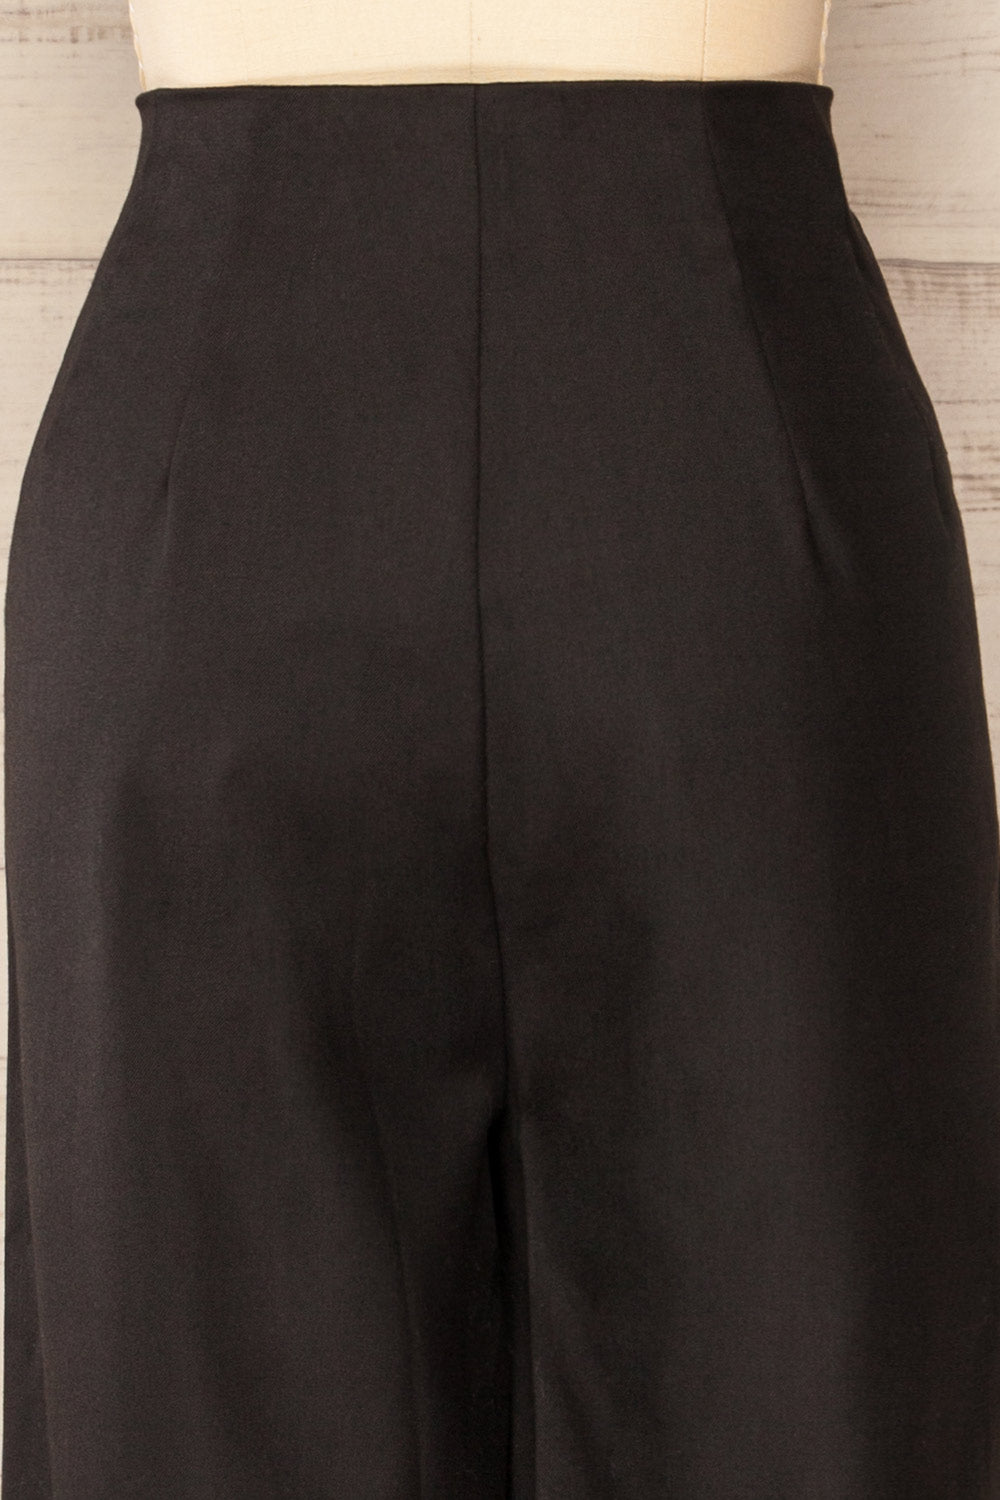 Oberhausen Black High-Waisted Pants w/ Belt | La petite garçonne back close-up